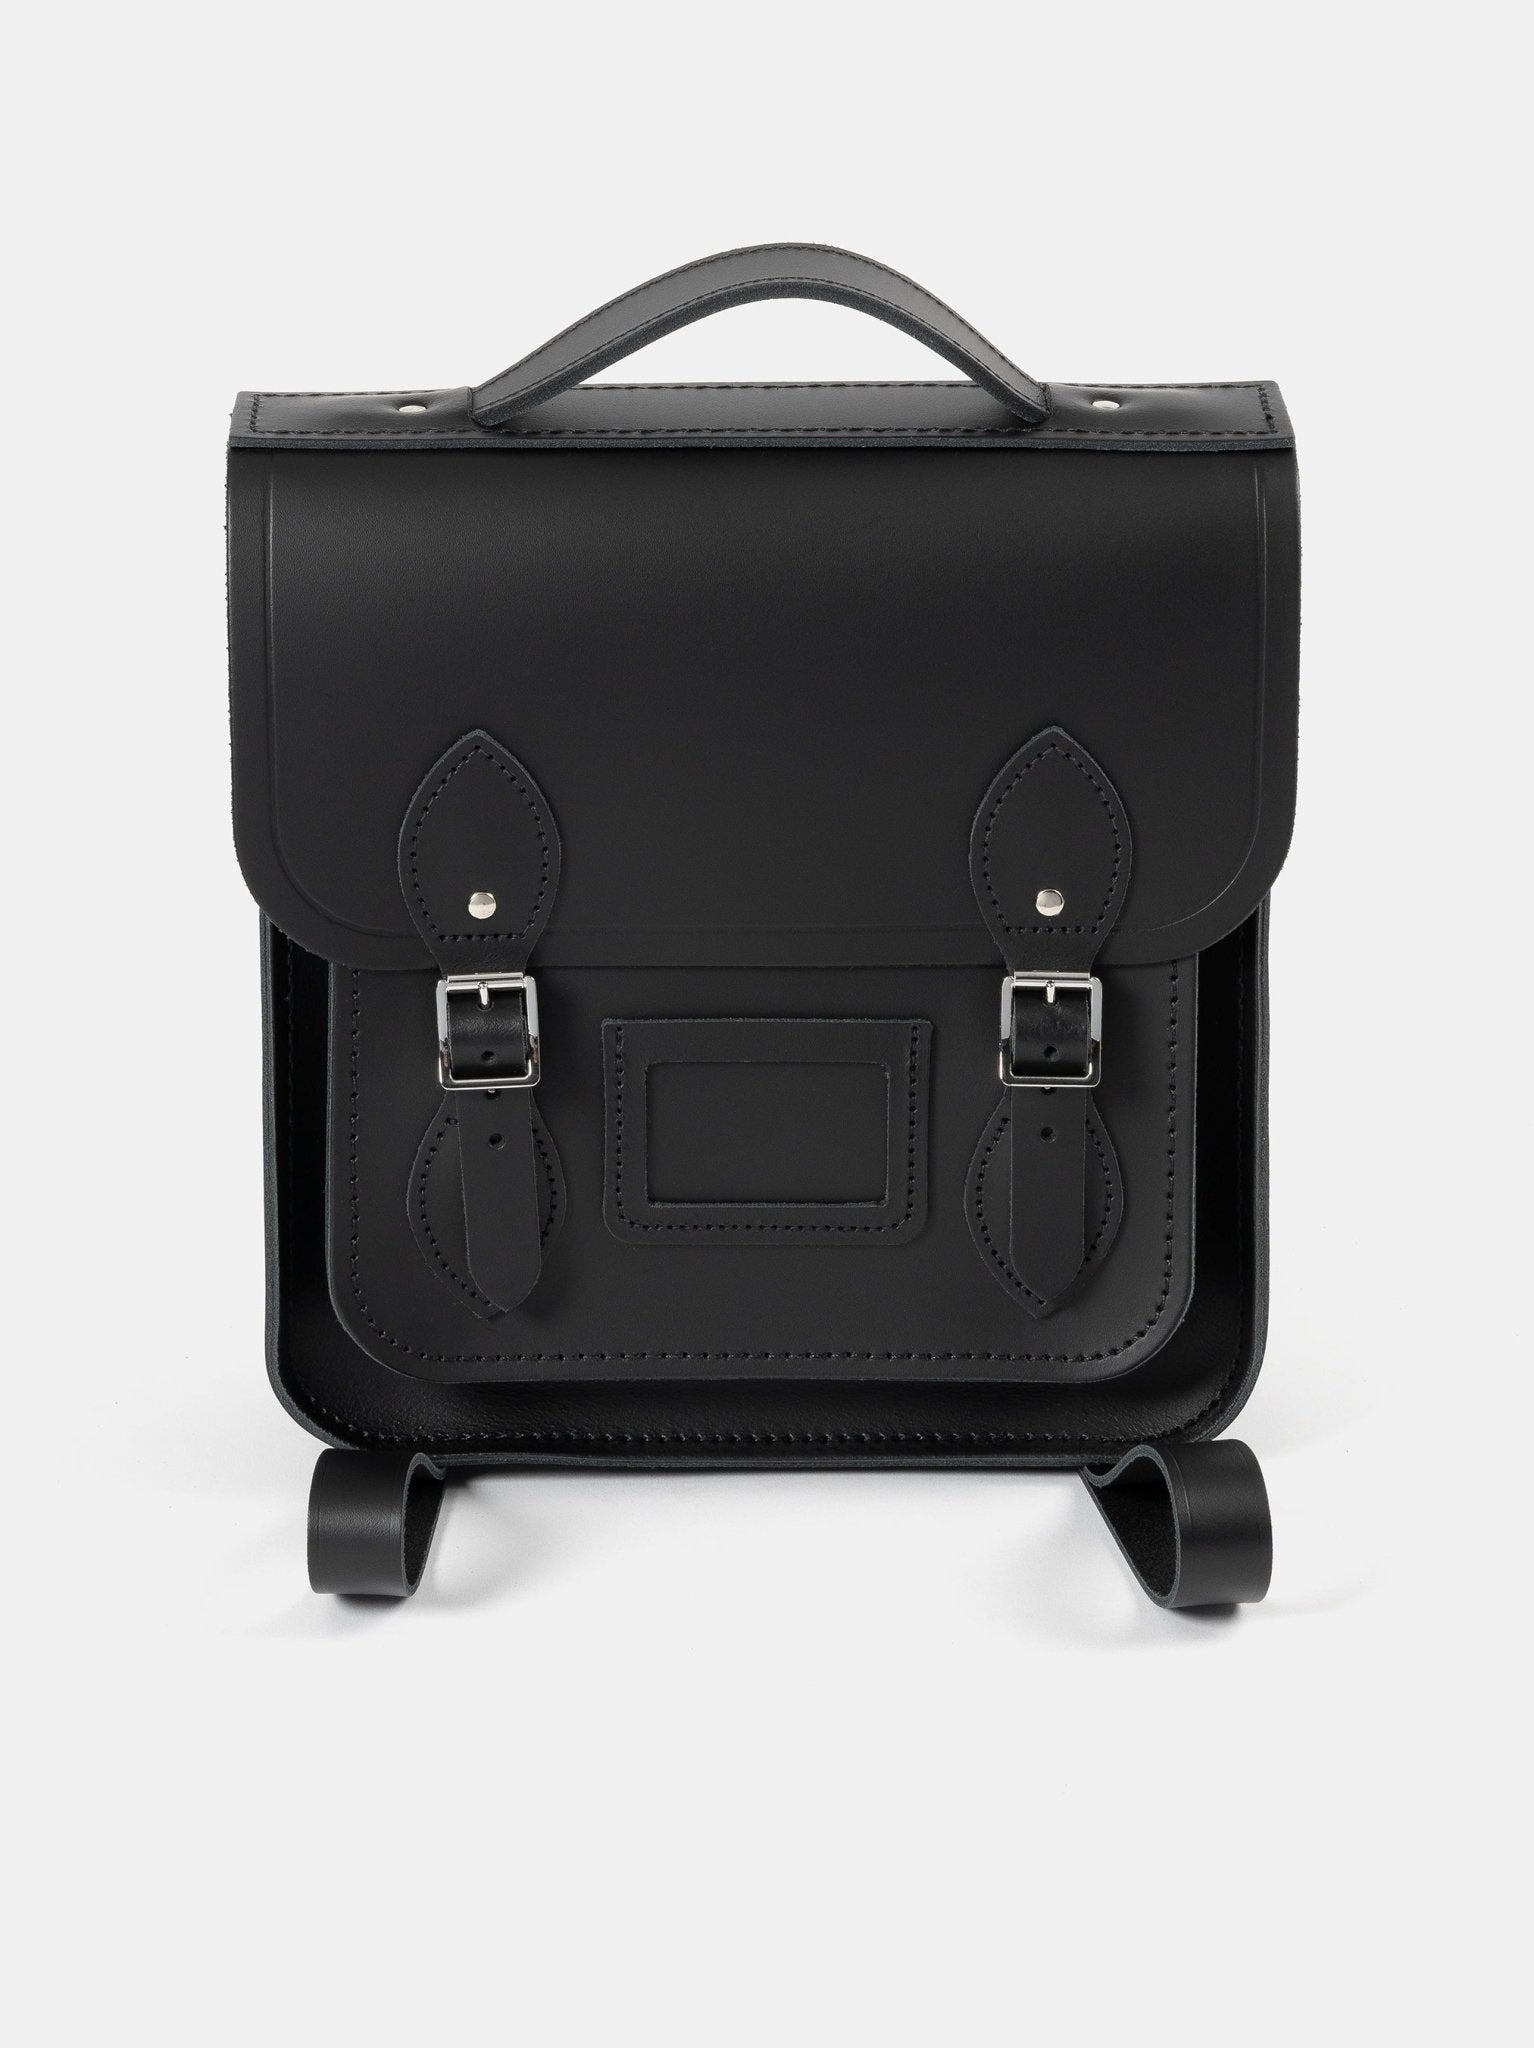 The Small Portrait Backpack - Black - The Cambridge Satchel Company EU Store